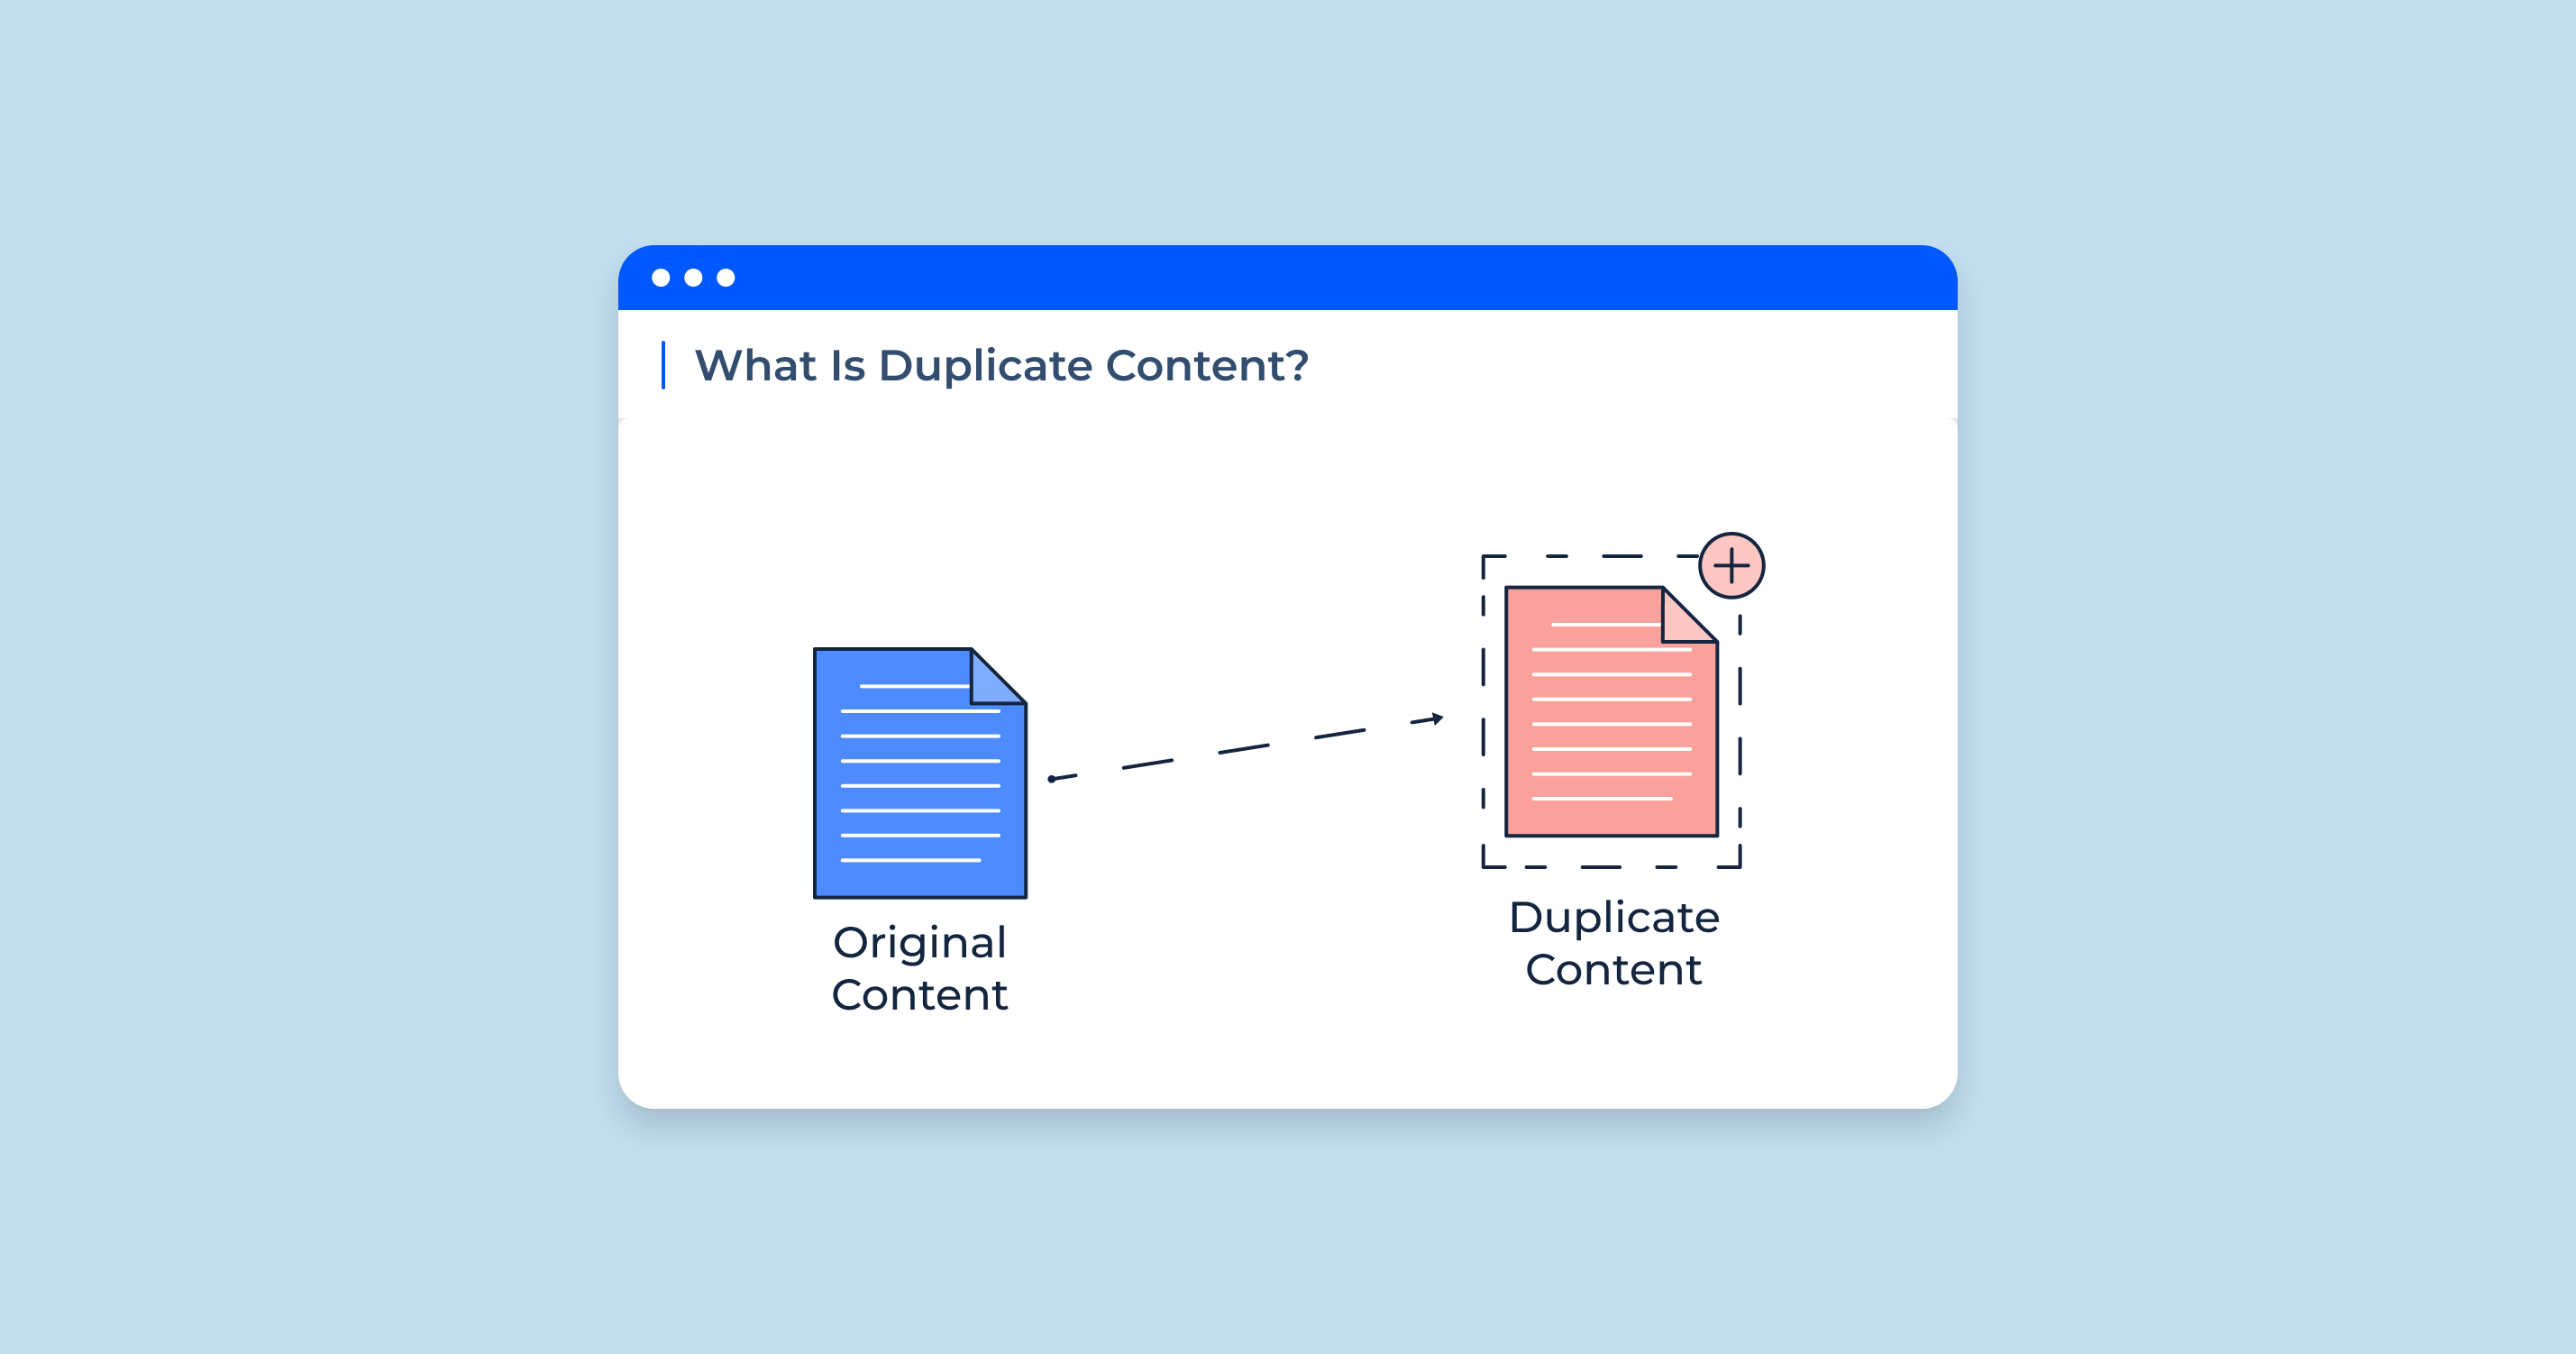 Check Duplicate Content